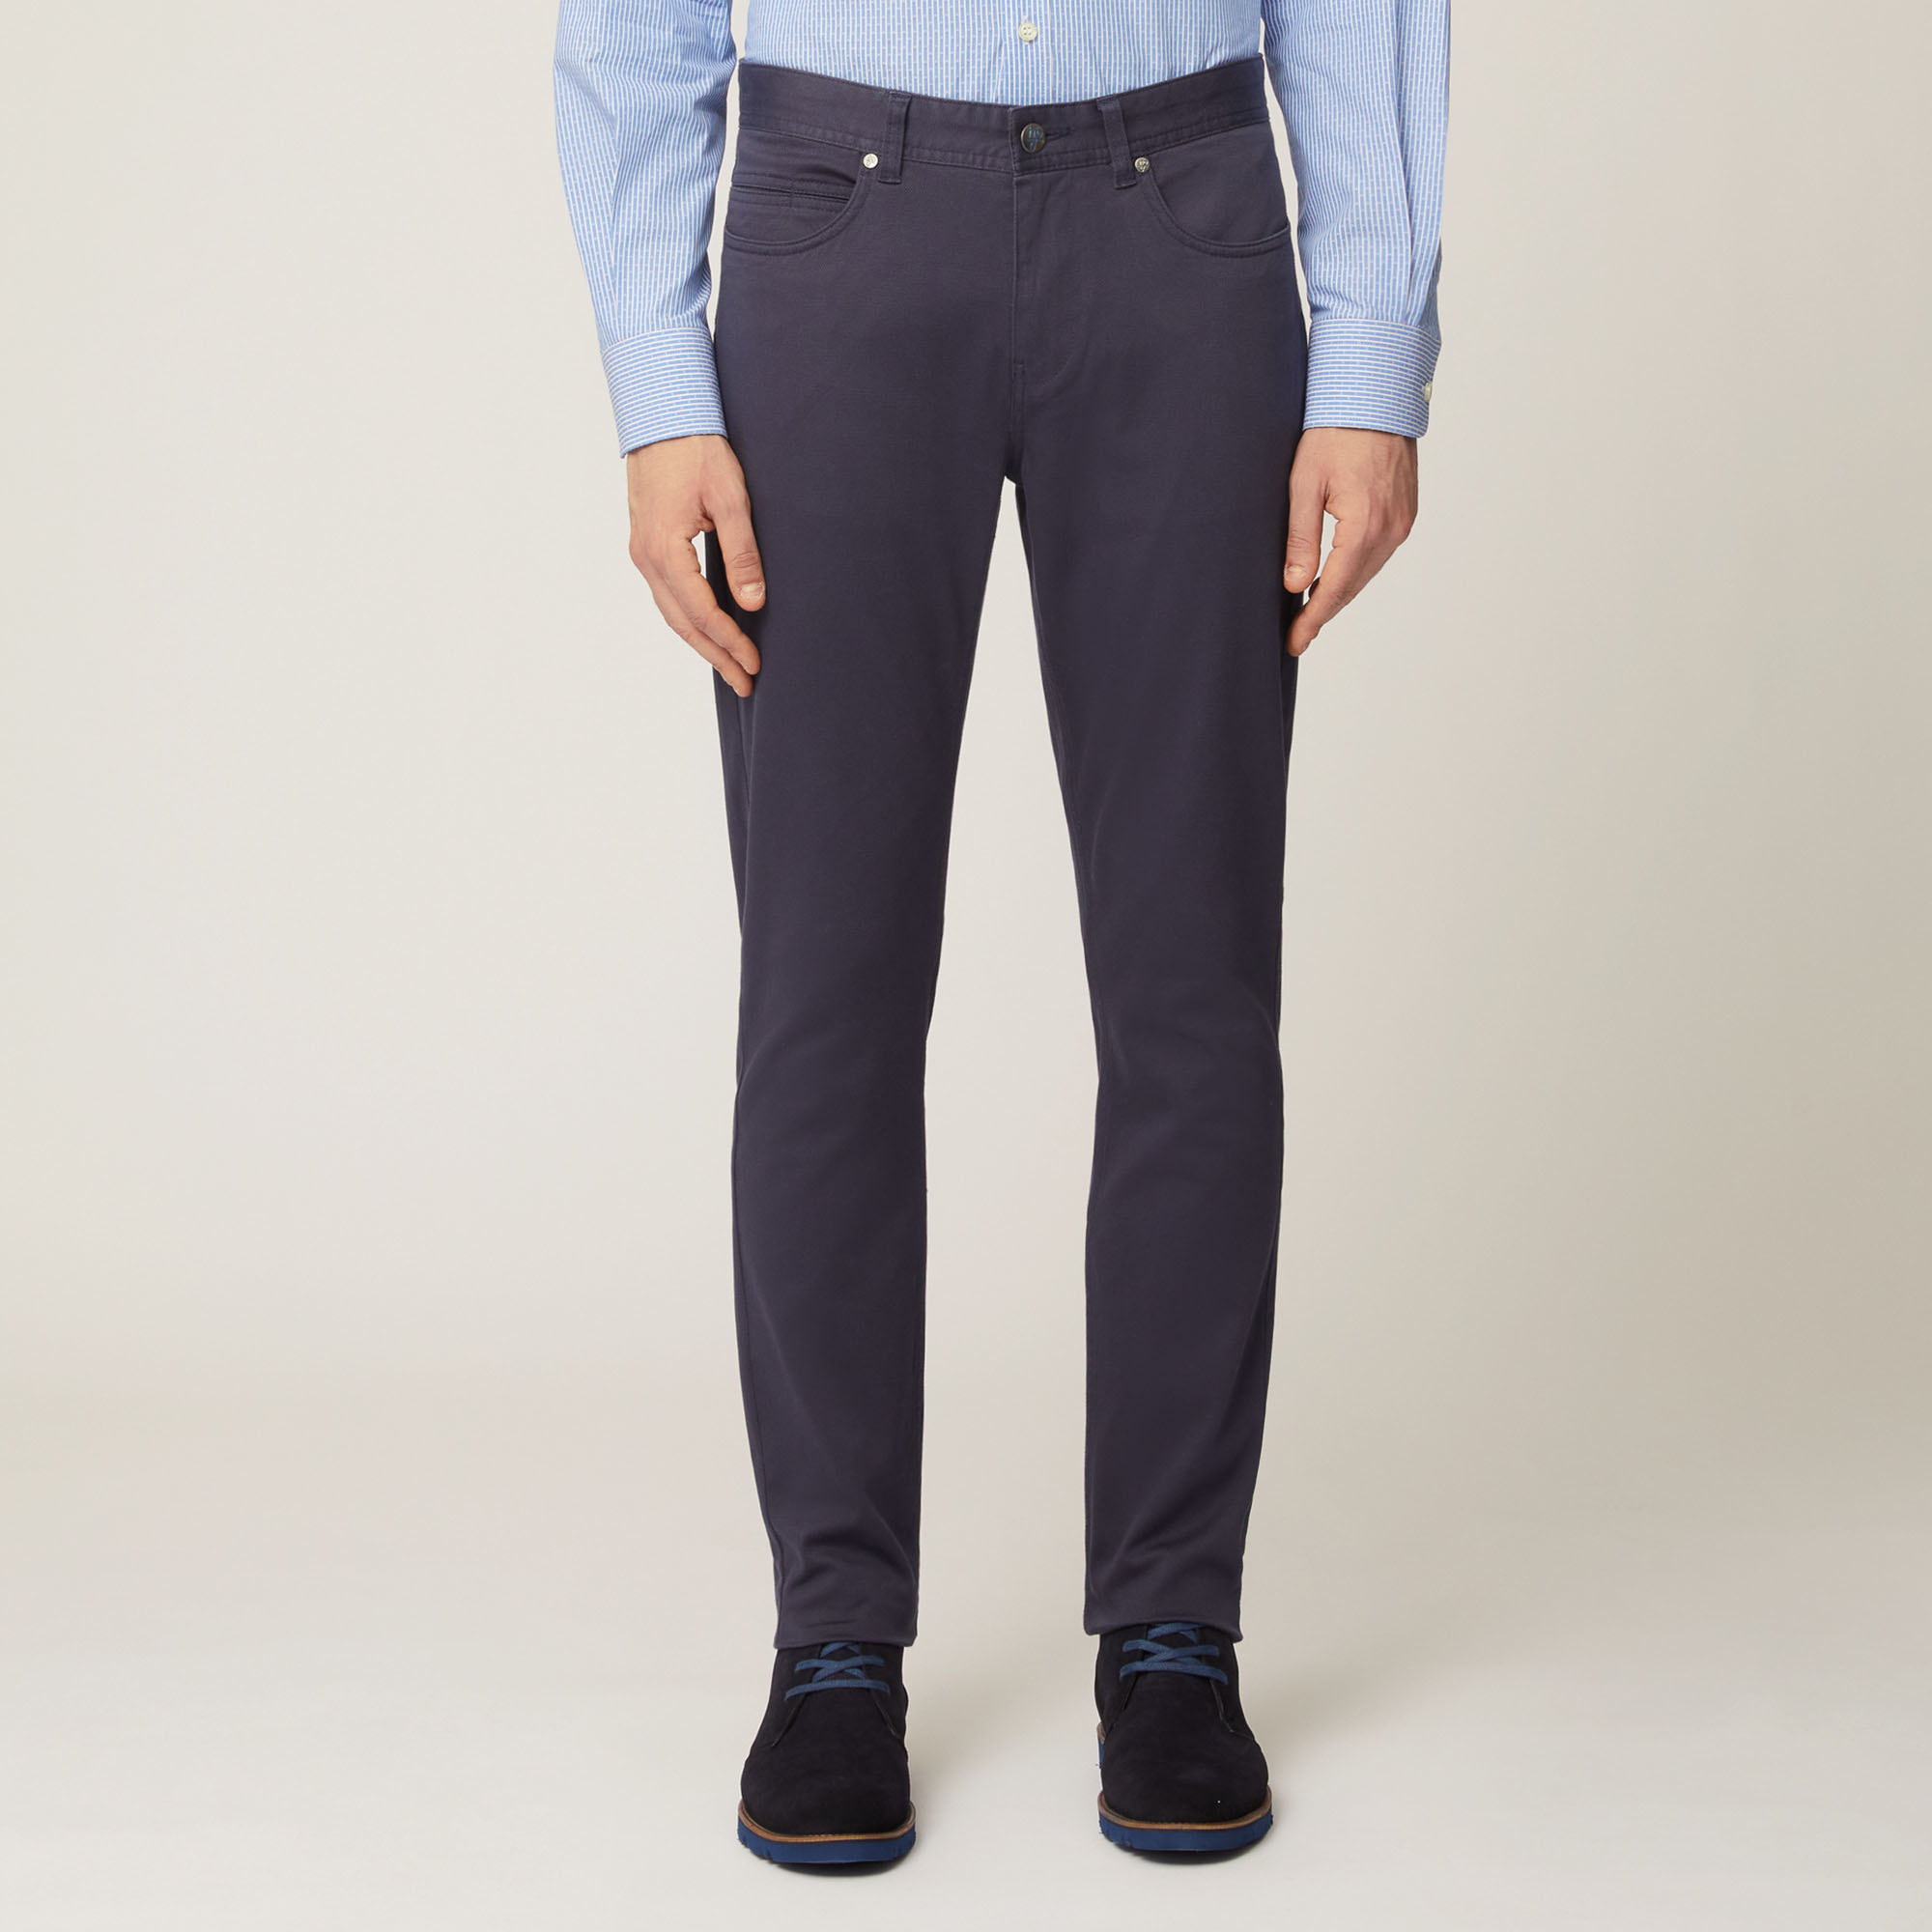 Pantalone Cinque Tasche Narrow Fit, Light Blue, large